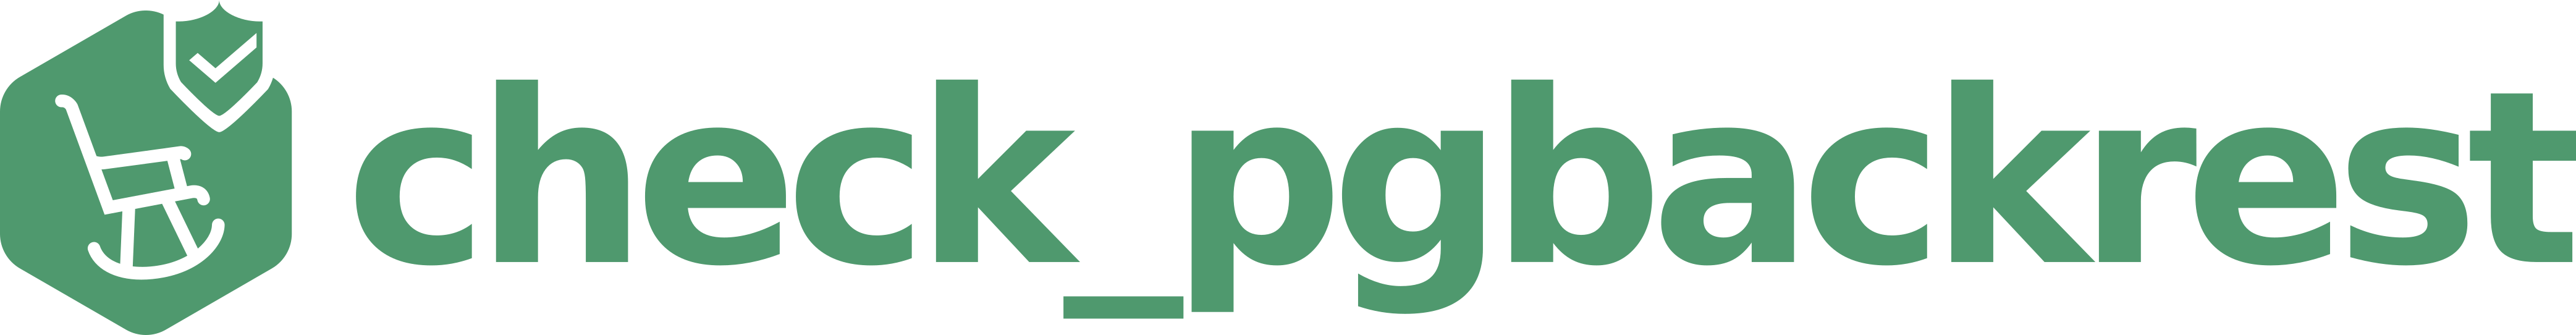 logo check_pgbackrest